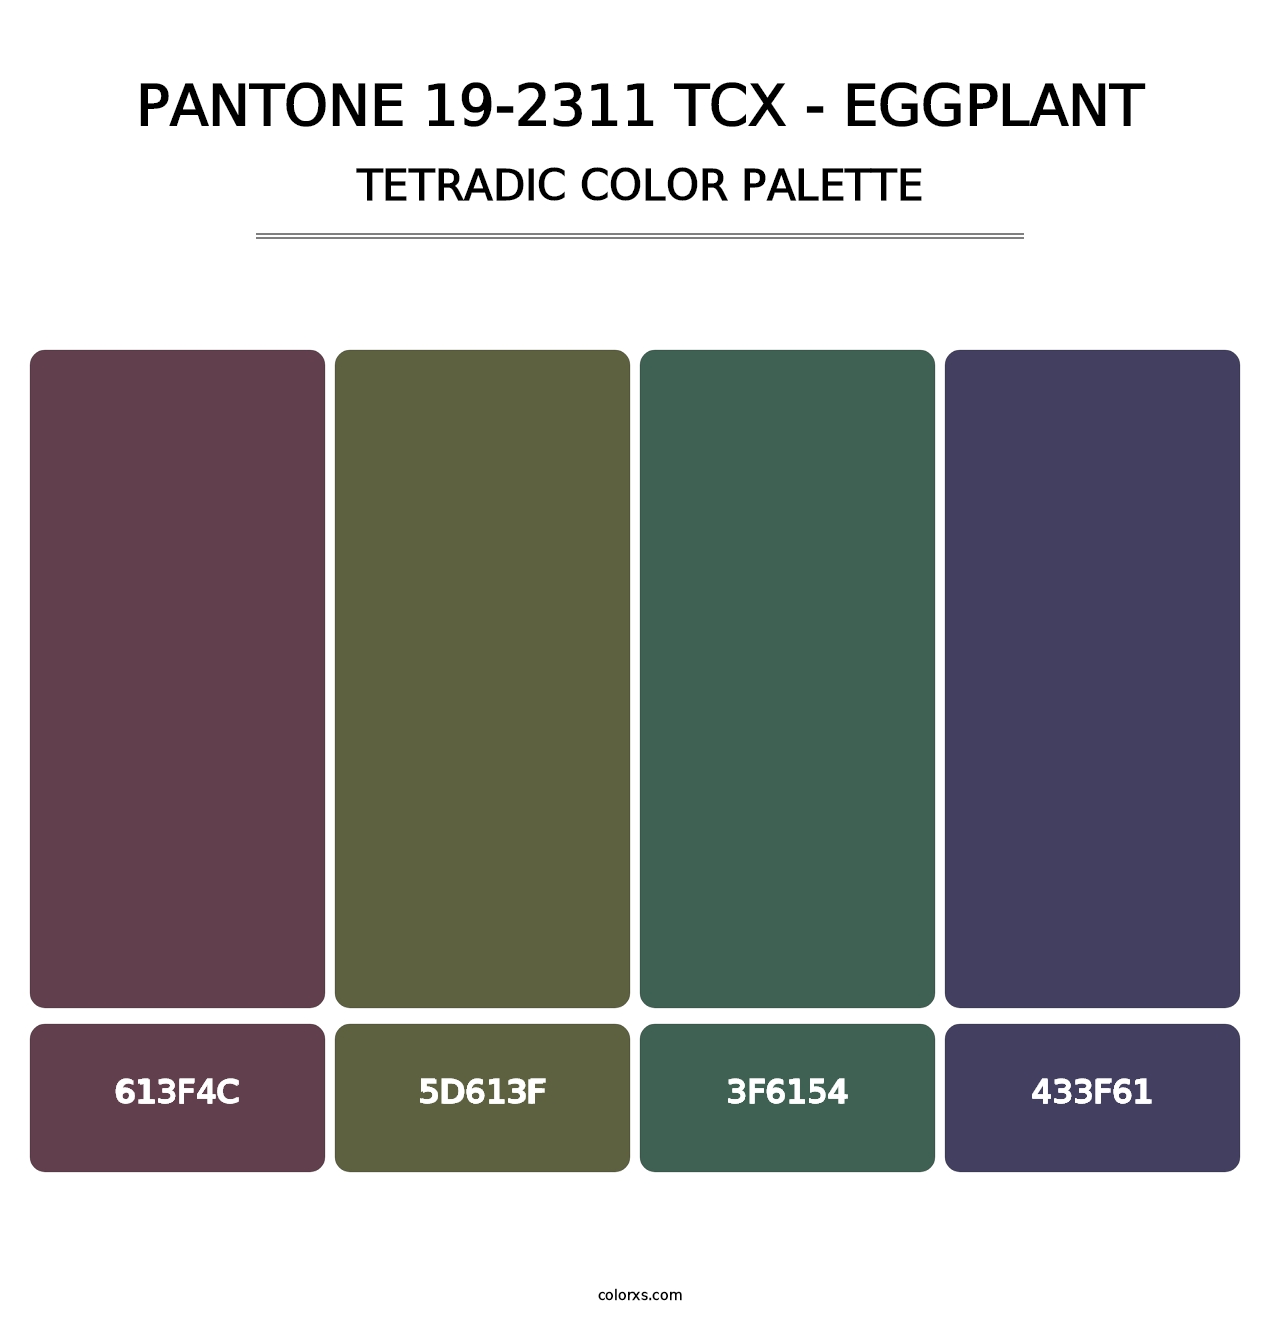 PANTONE 19-2311 TCX - Eggplant - Tetradic Color Palette